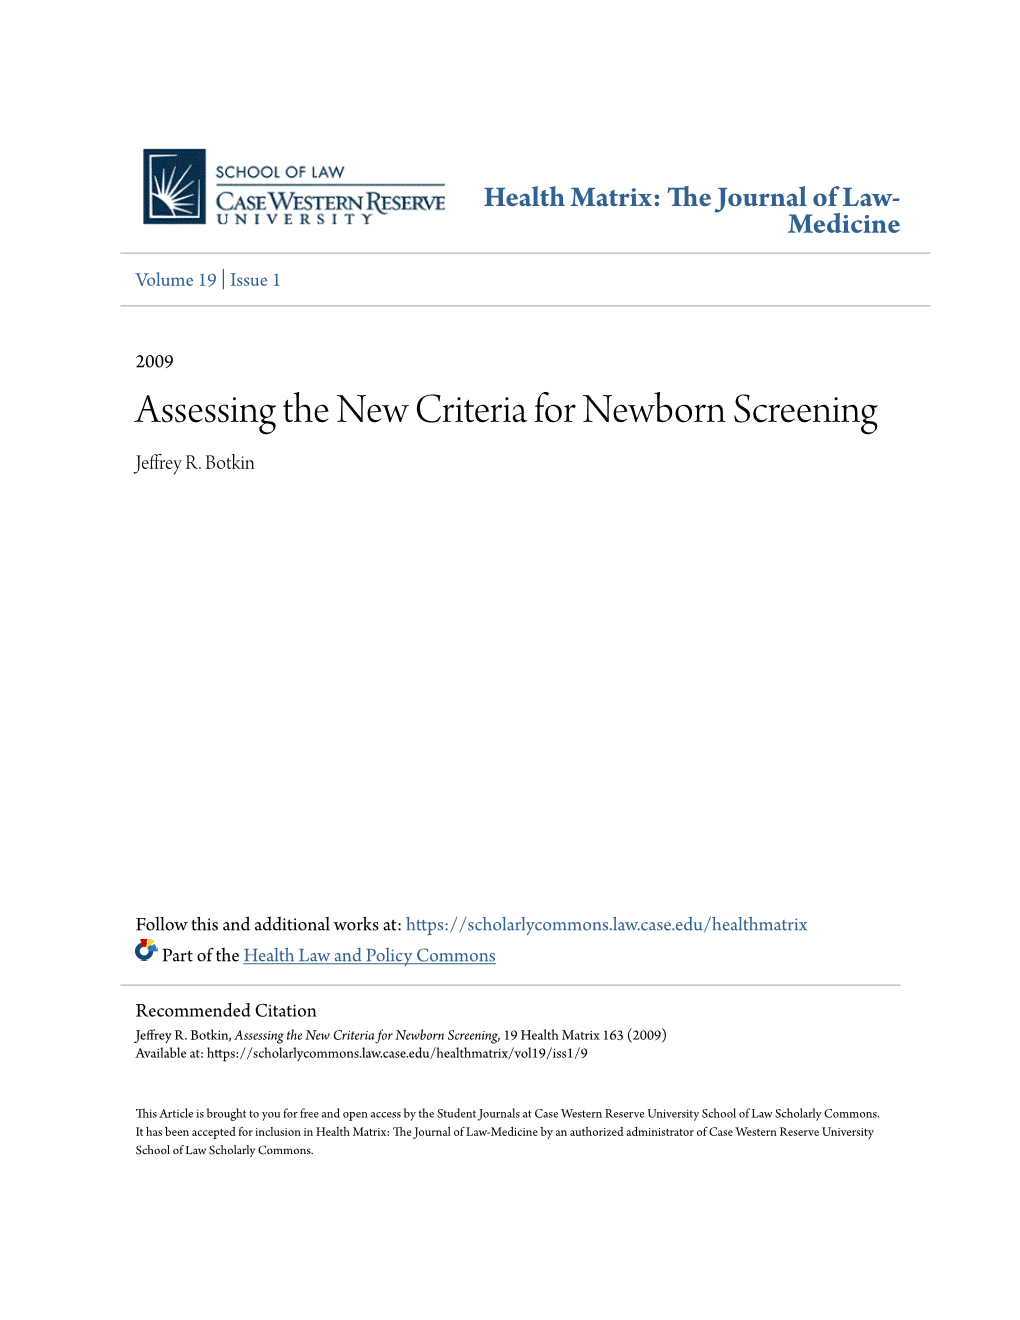 Assessing the New Criteria for Newborn Screening Jeffrey R